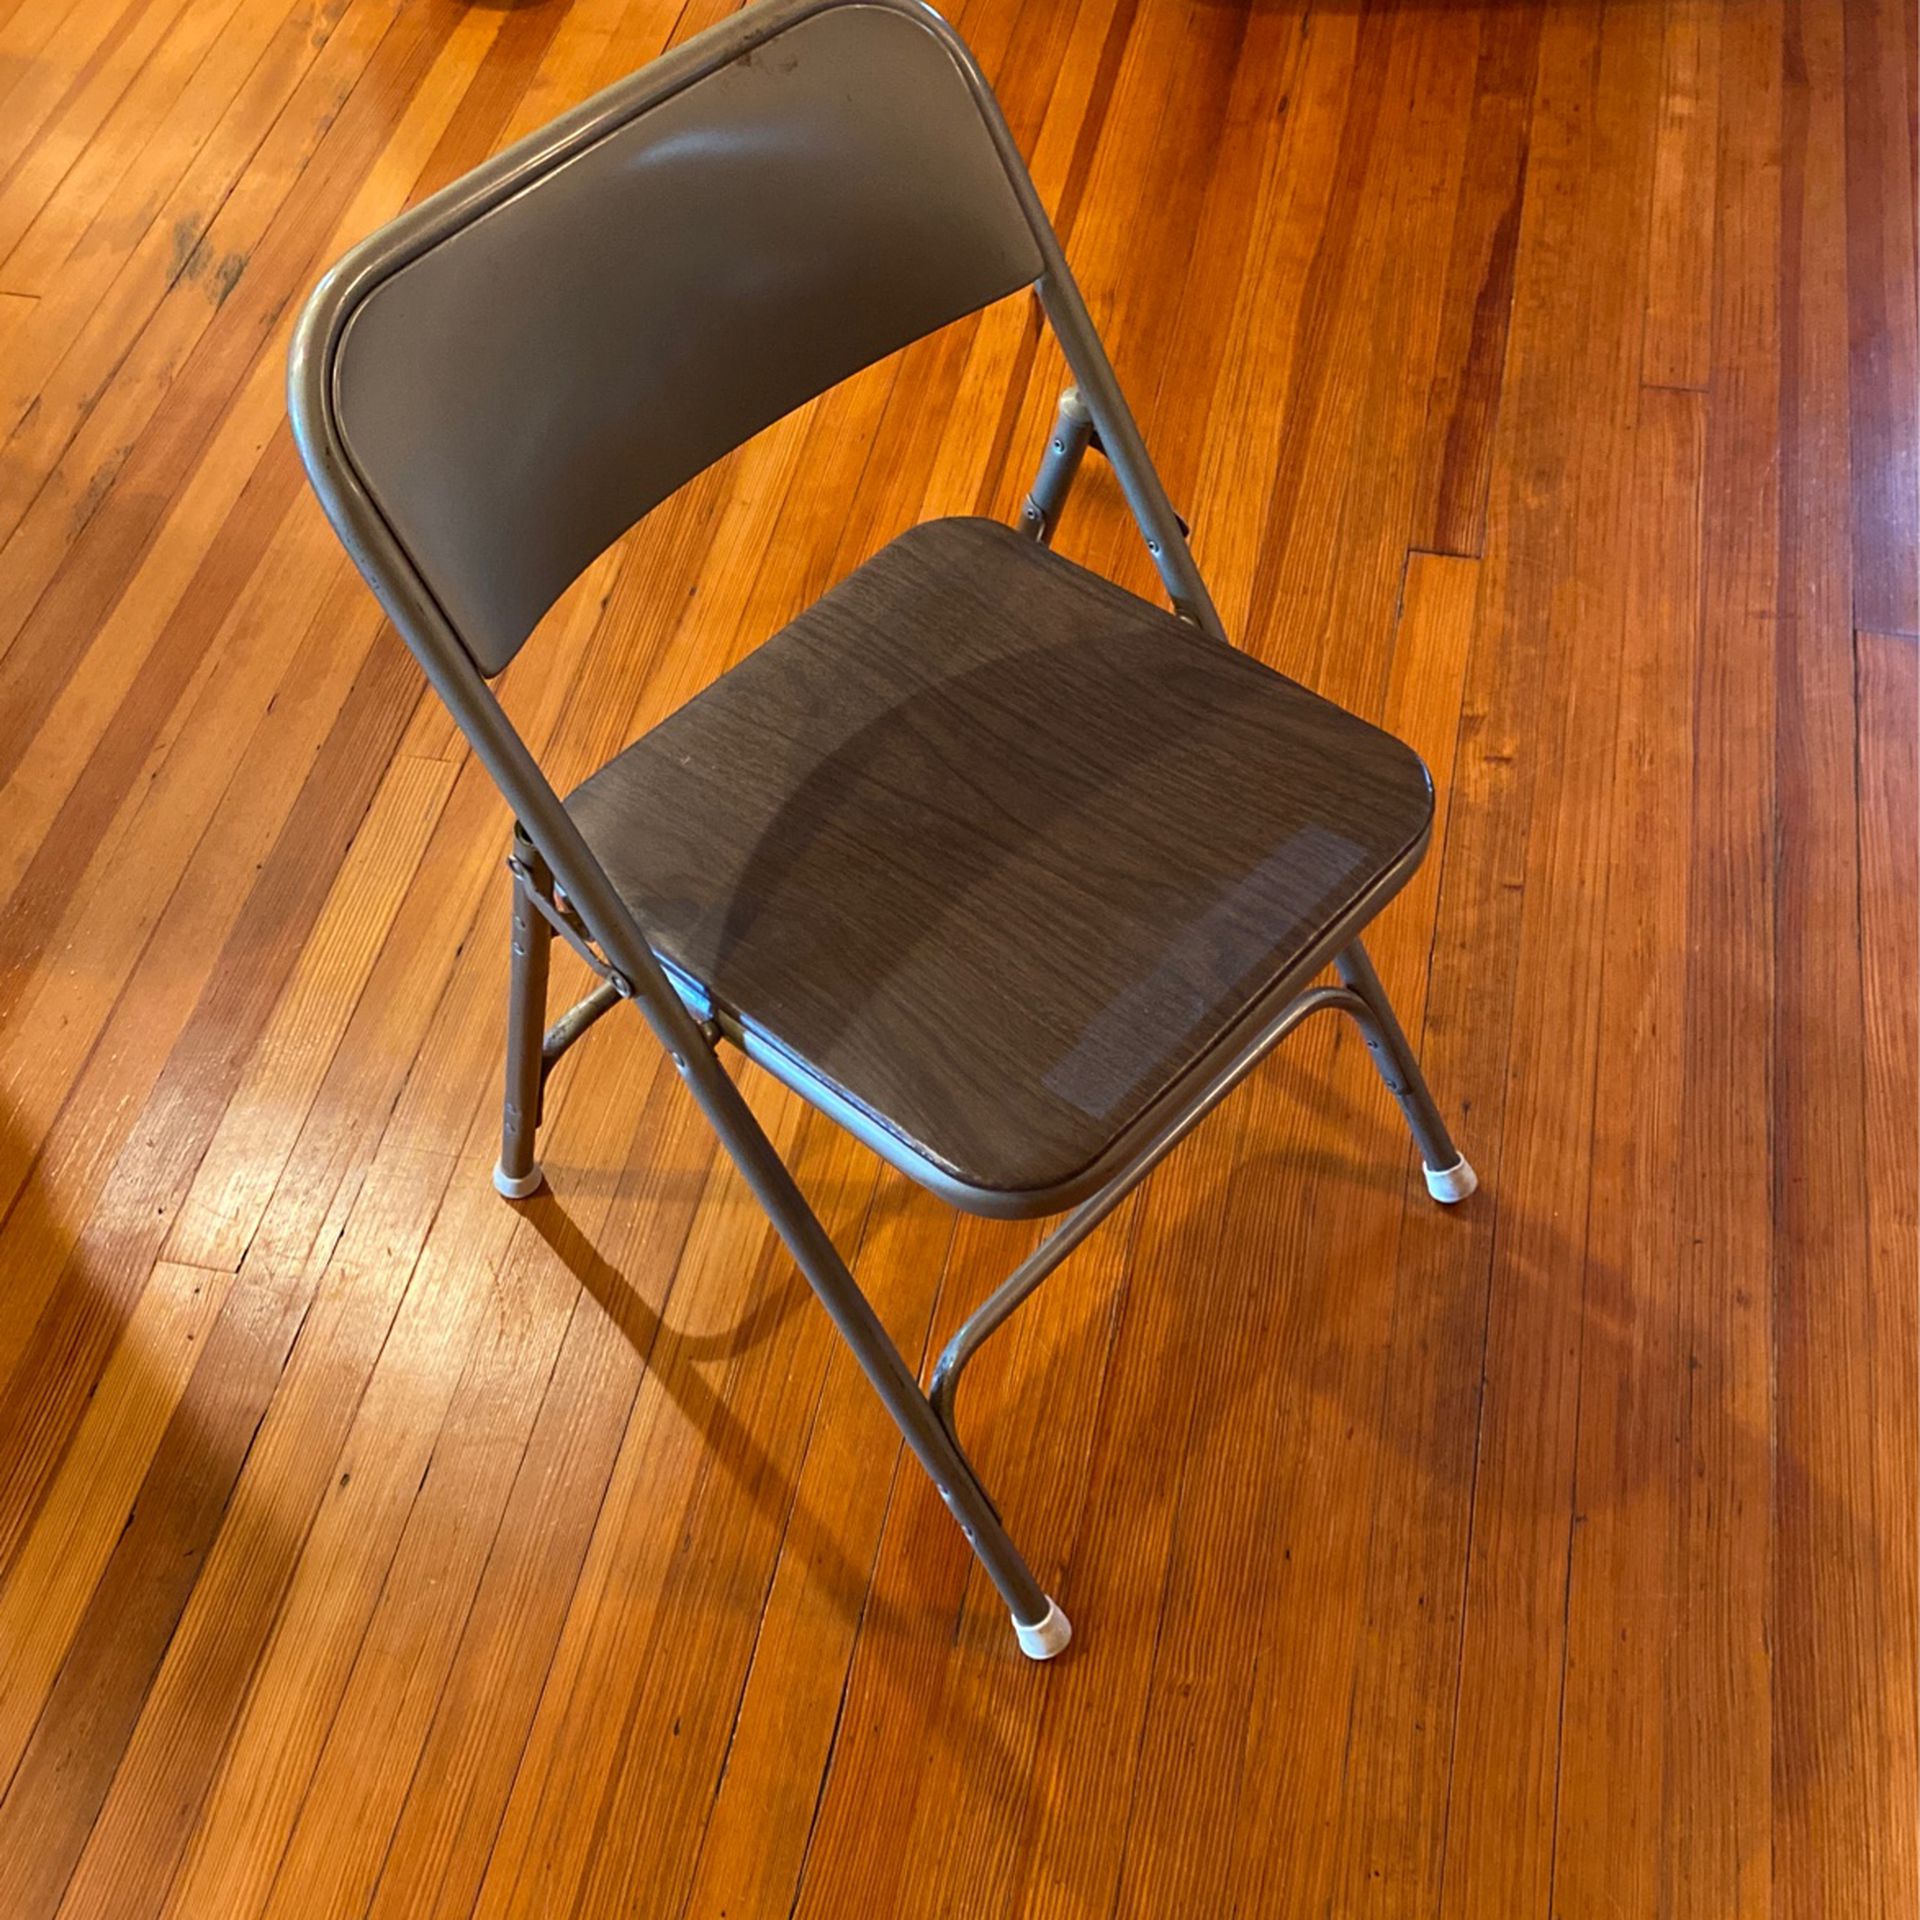 8 Metal Folding Chairs W Memory Foam Seat Cushions